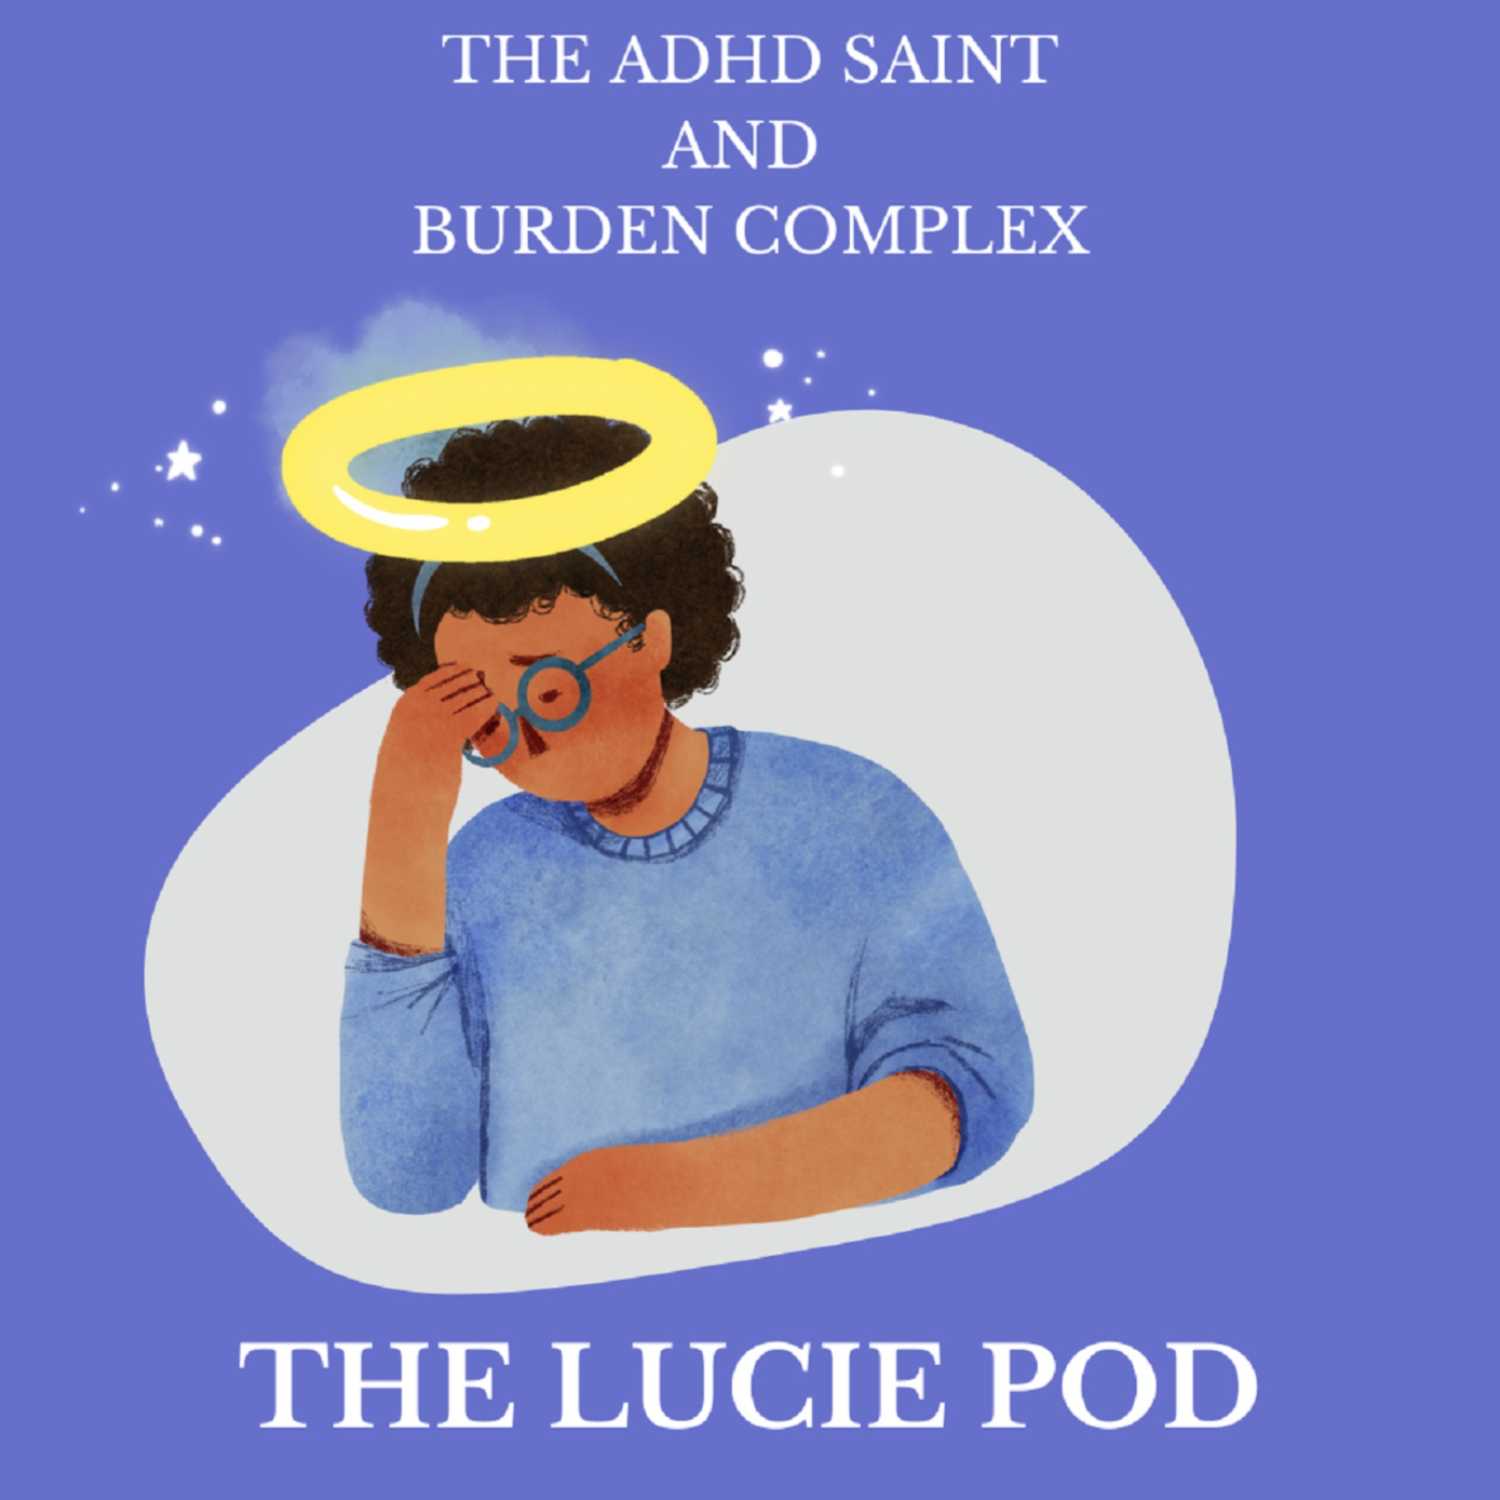 The ADHD Saint and Burden Complex